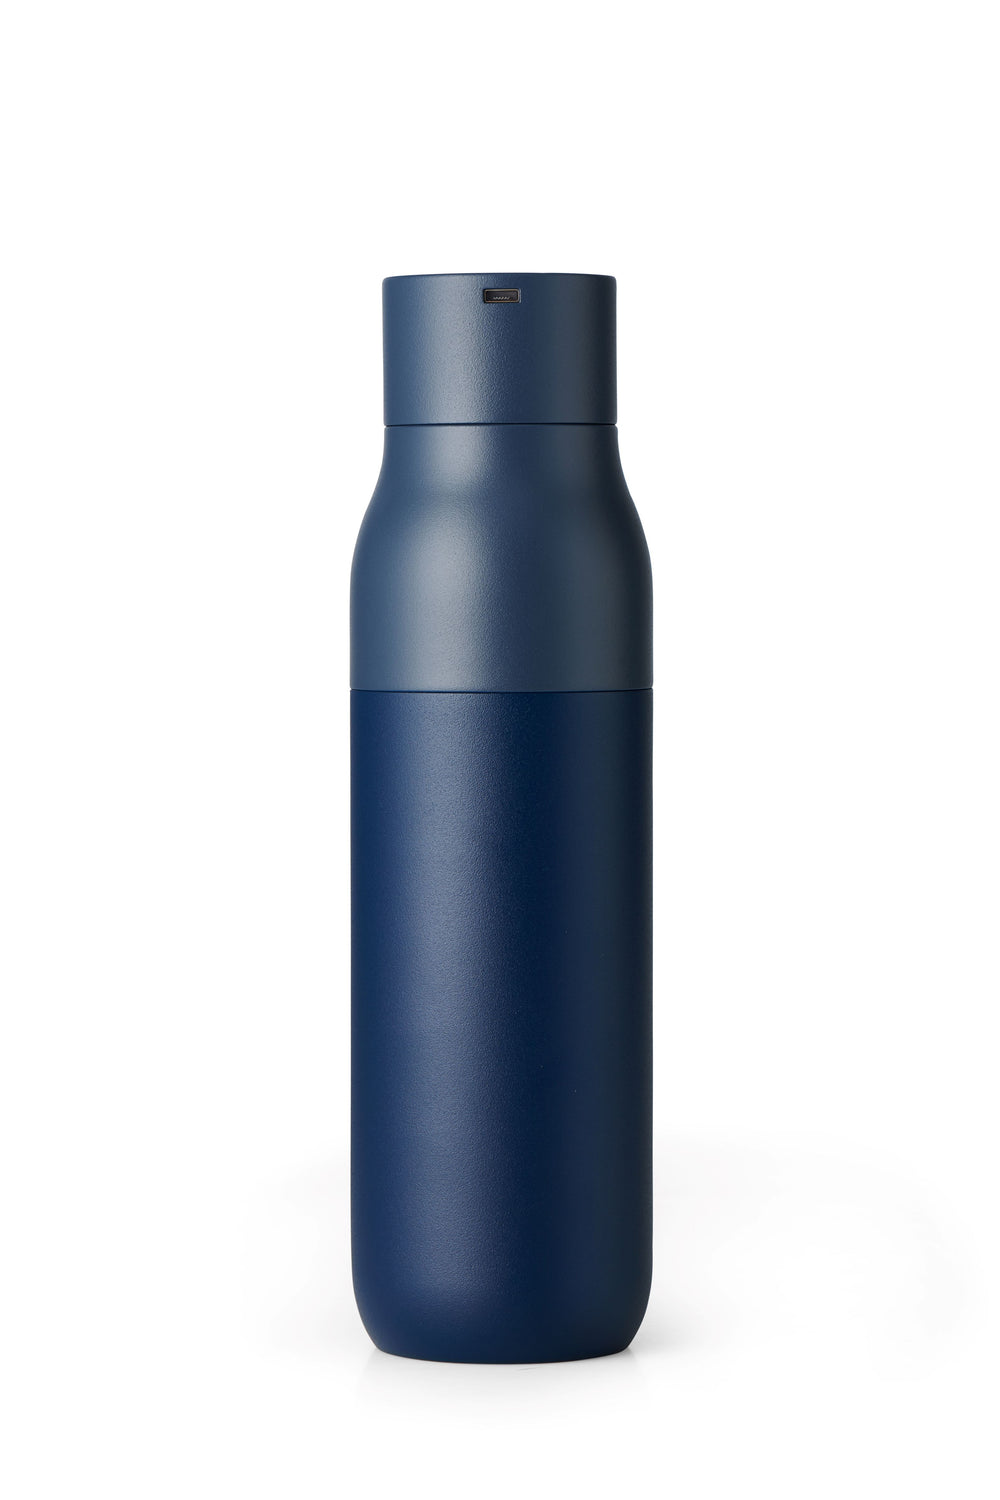 Larq PureVis Insulated Bottle - 17 Oz